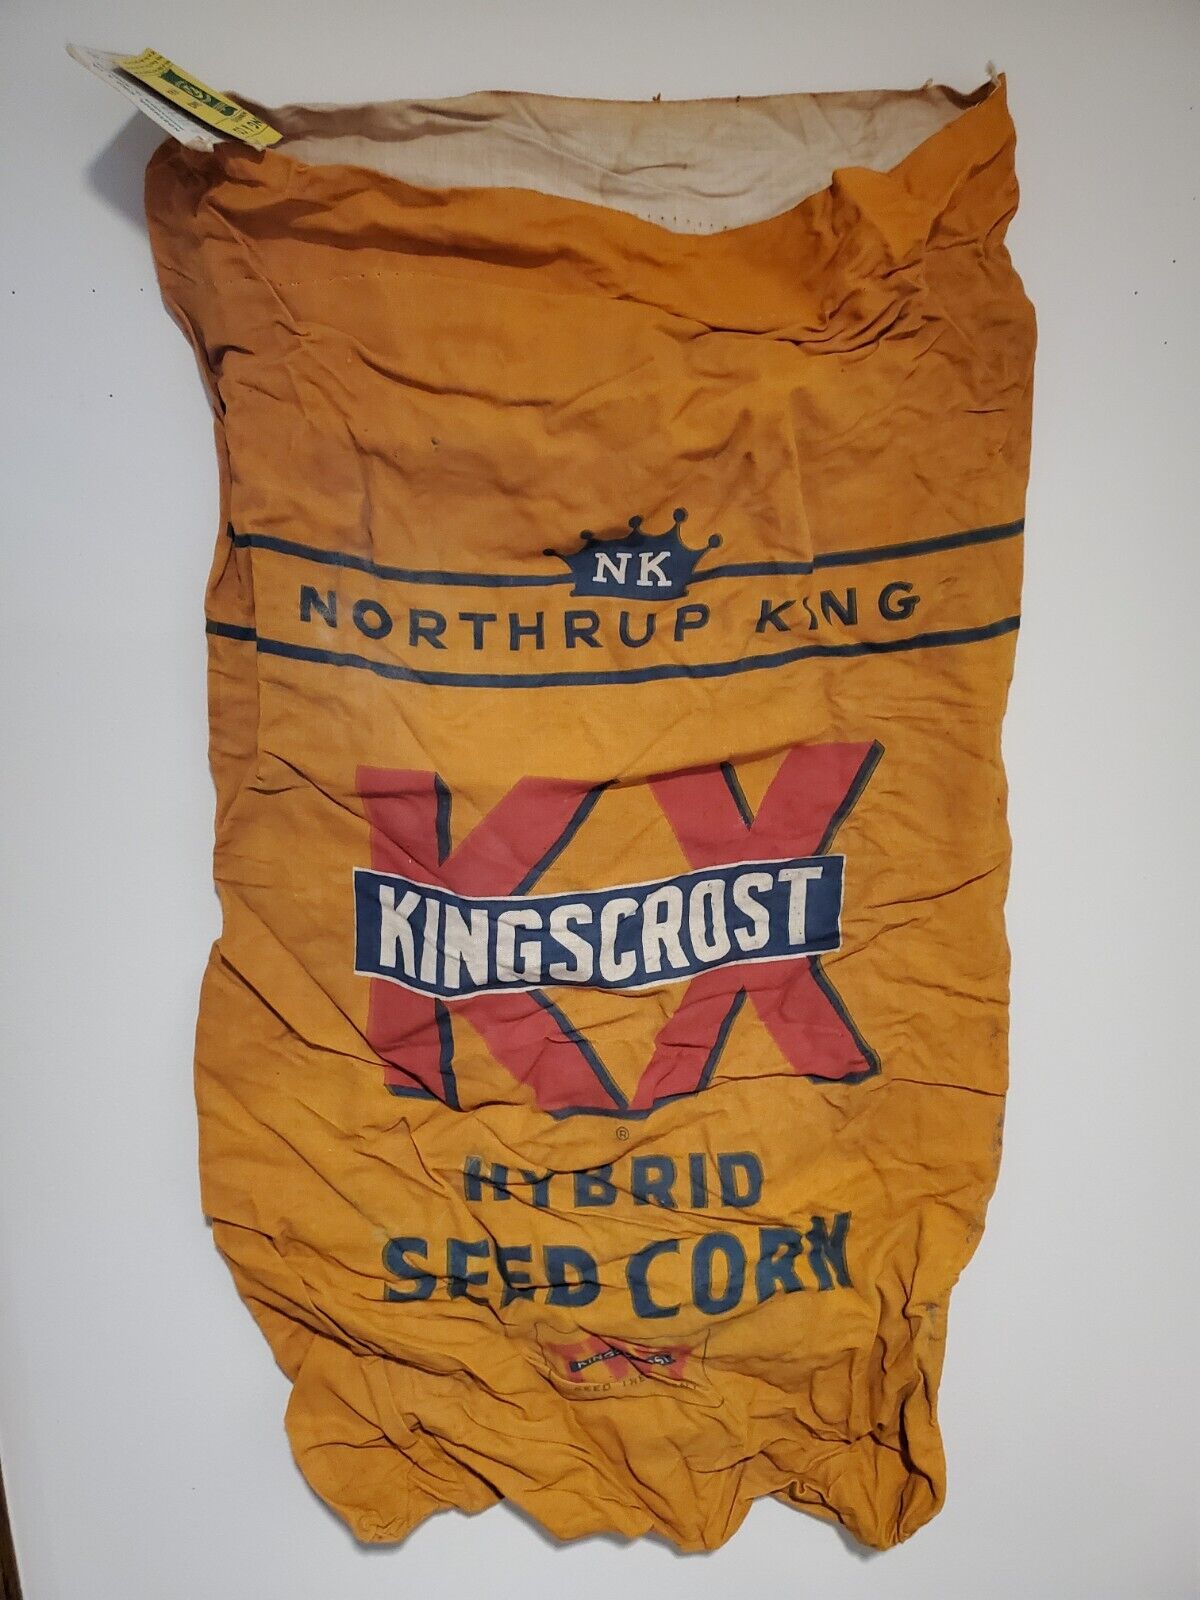 Vintage Northrup King seed corn Sack Kingscrost bag Kerkhoven Minnesota 1957